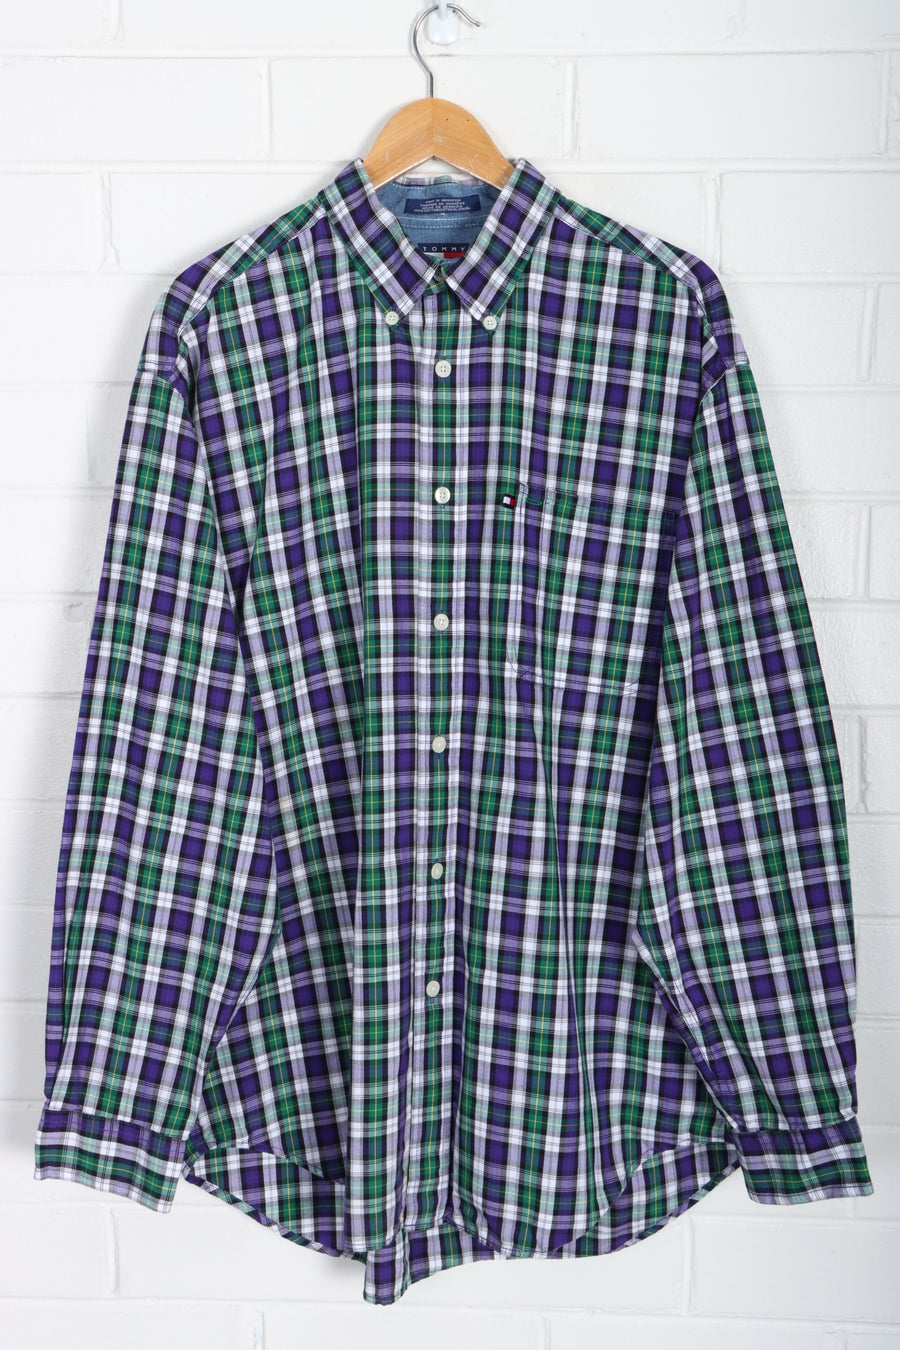 TOMMY HILFIGER JEANS Purple & Green Plaid Button Up Shirt (XL)